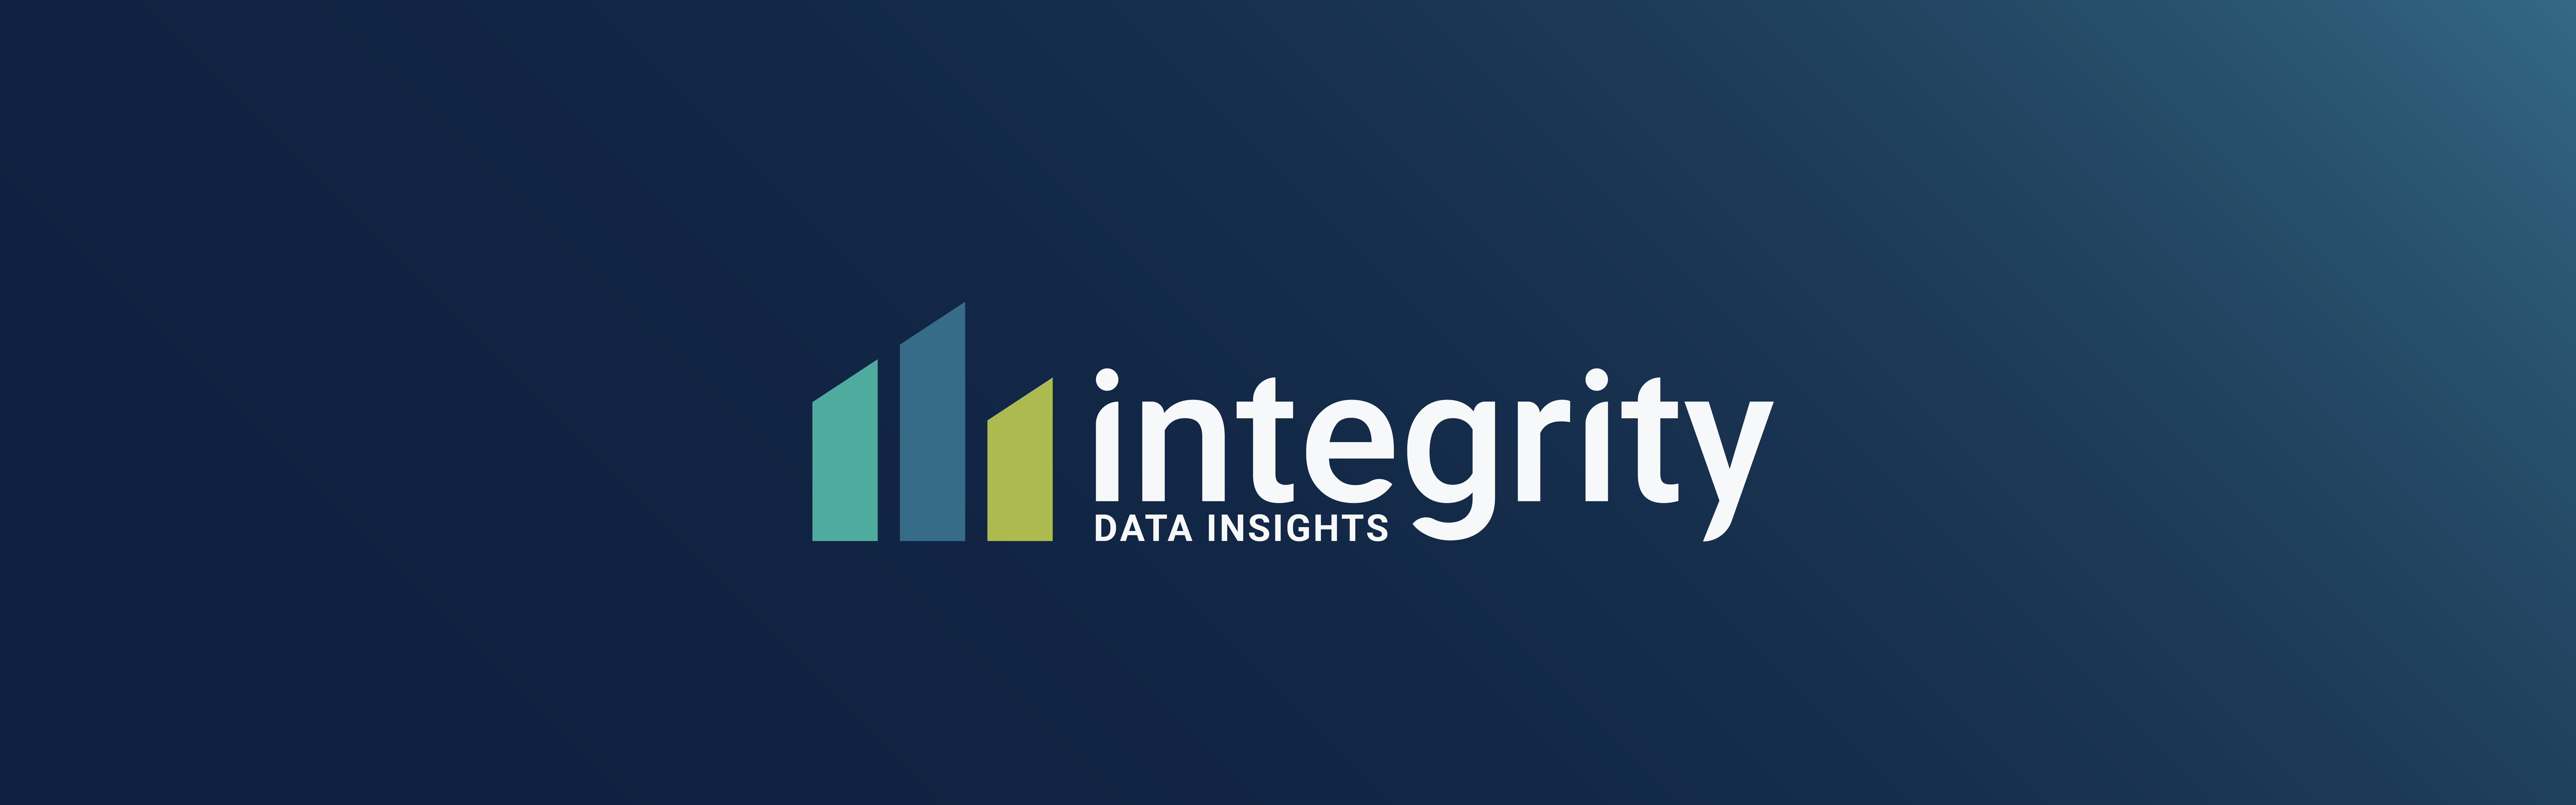 Integrity Data Insights logo design